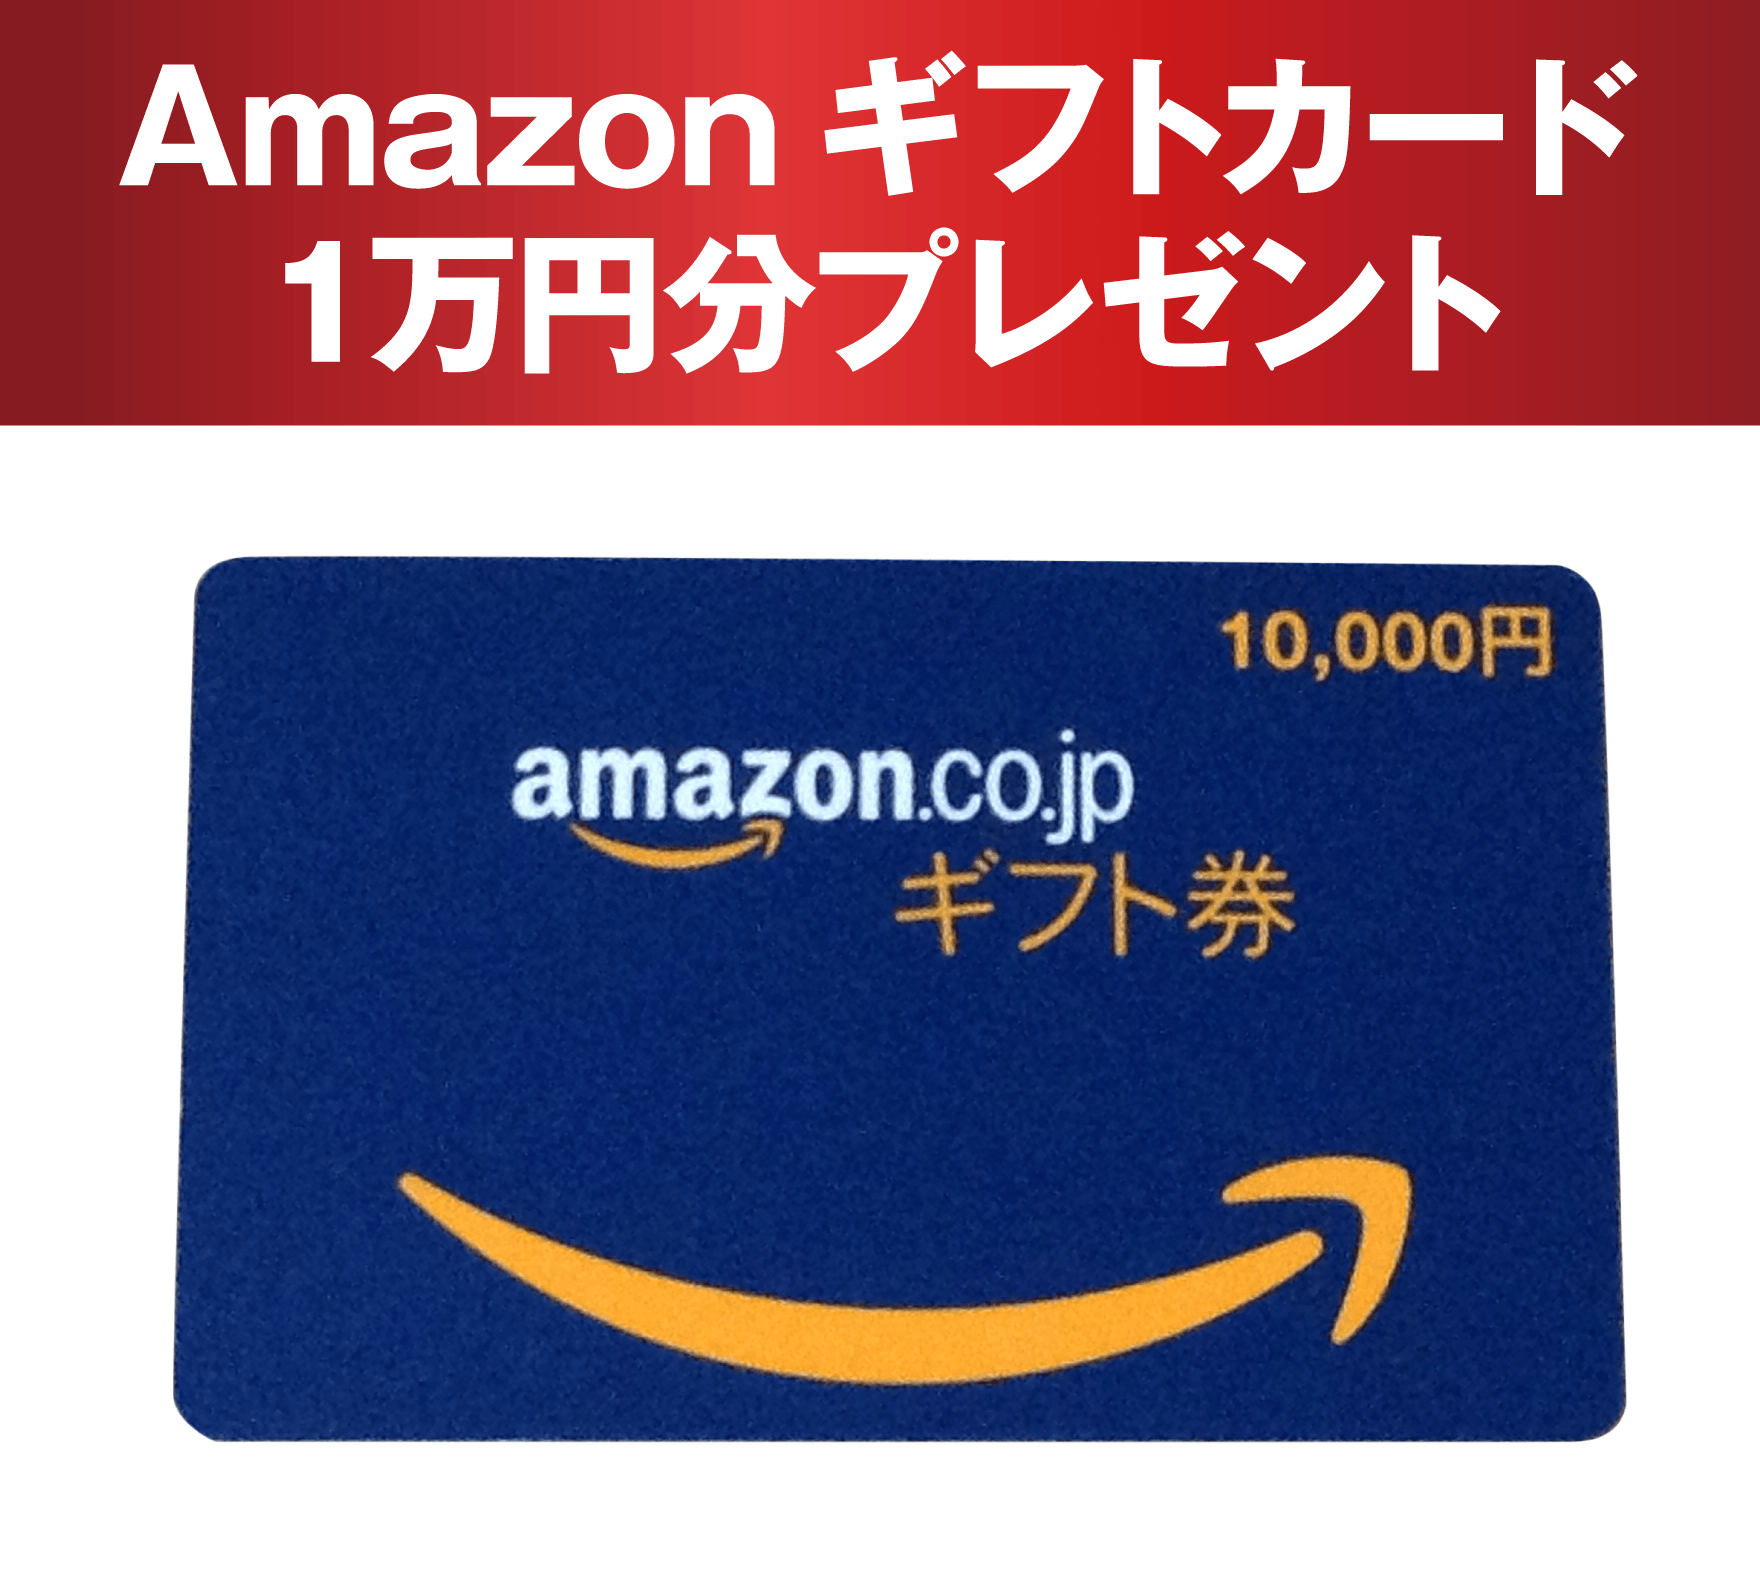 2. Amazon ギフトカード1万円分プレゼント